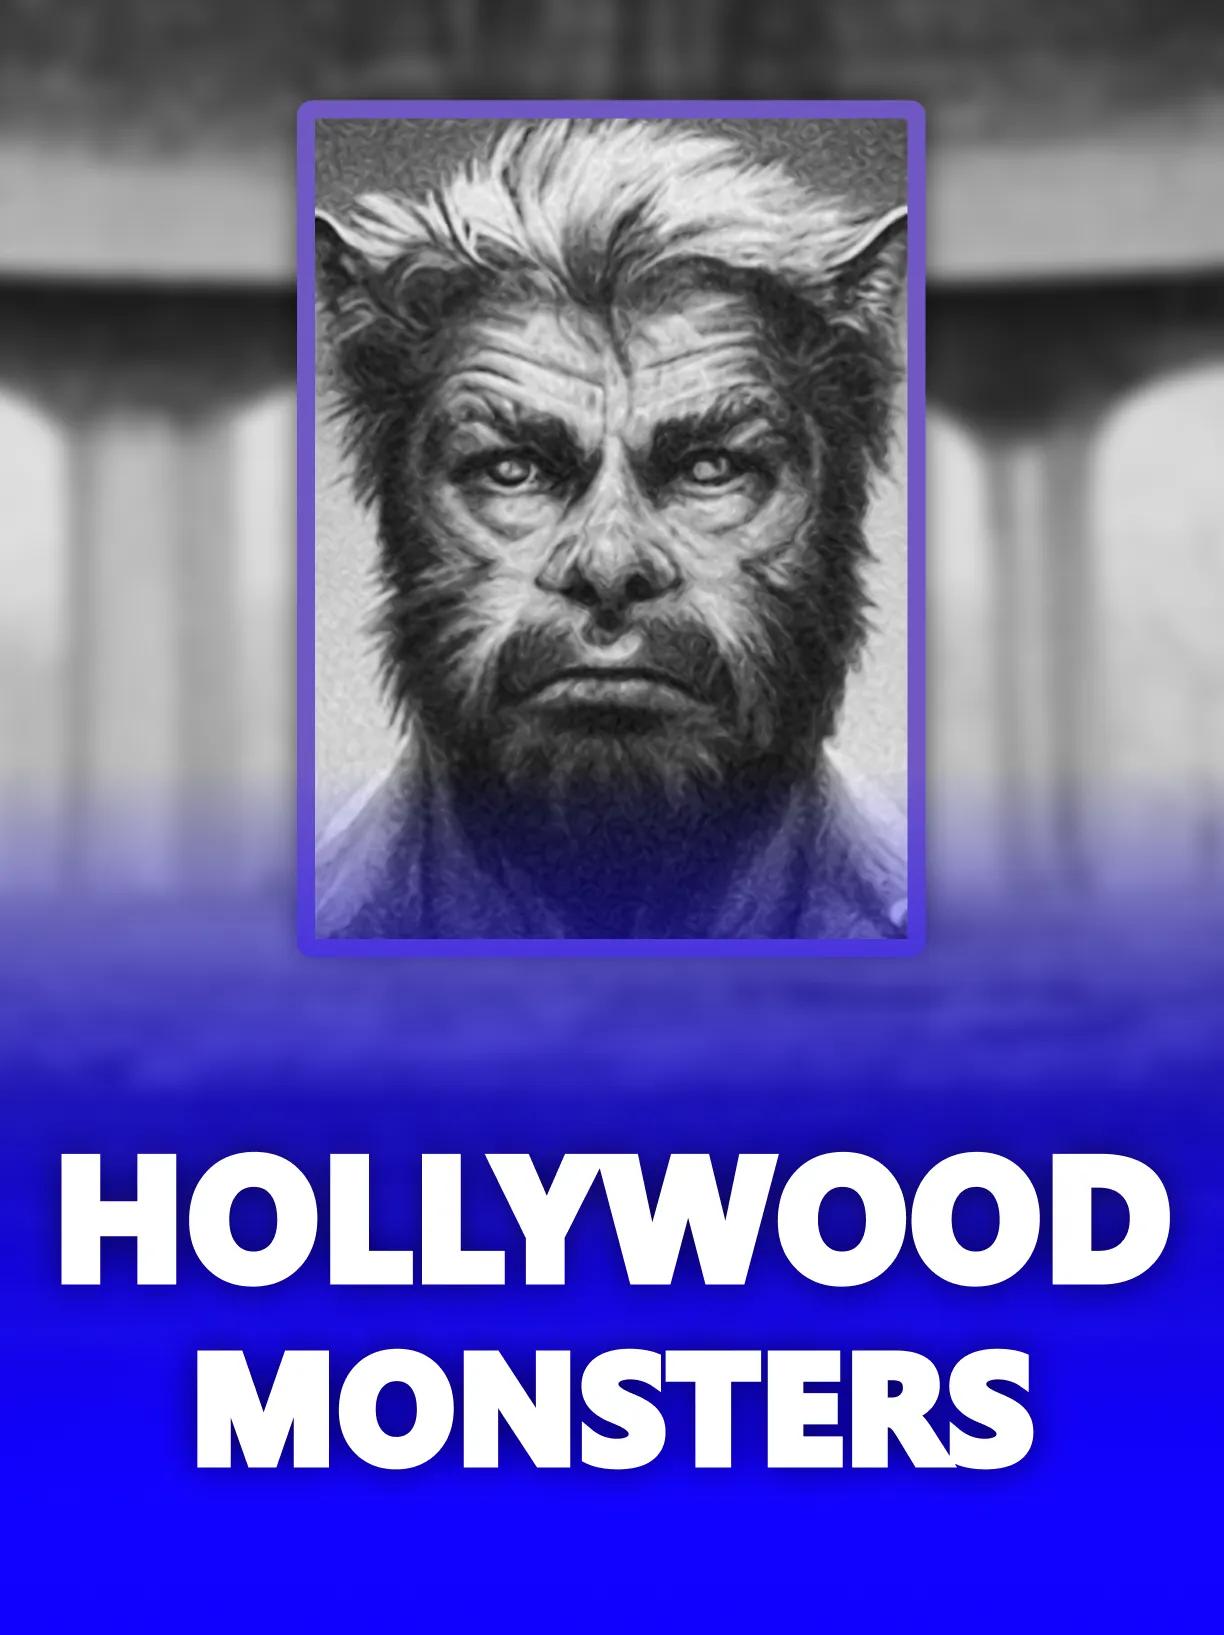 ug_Hollywood_Monsters_square.webp